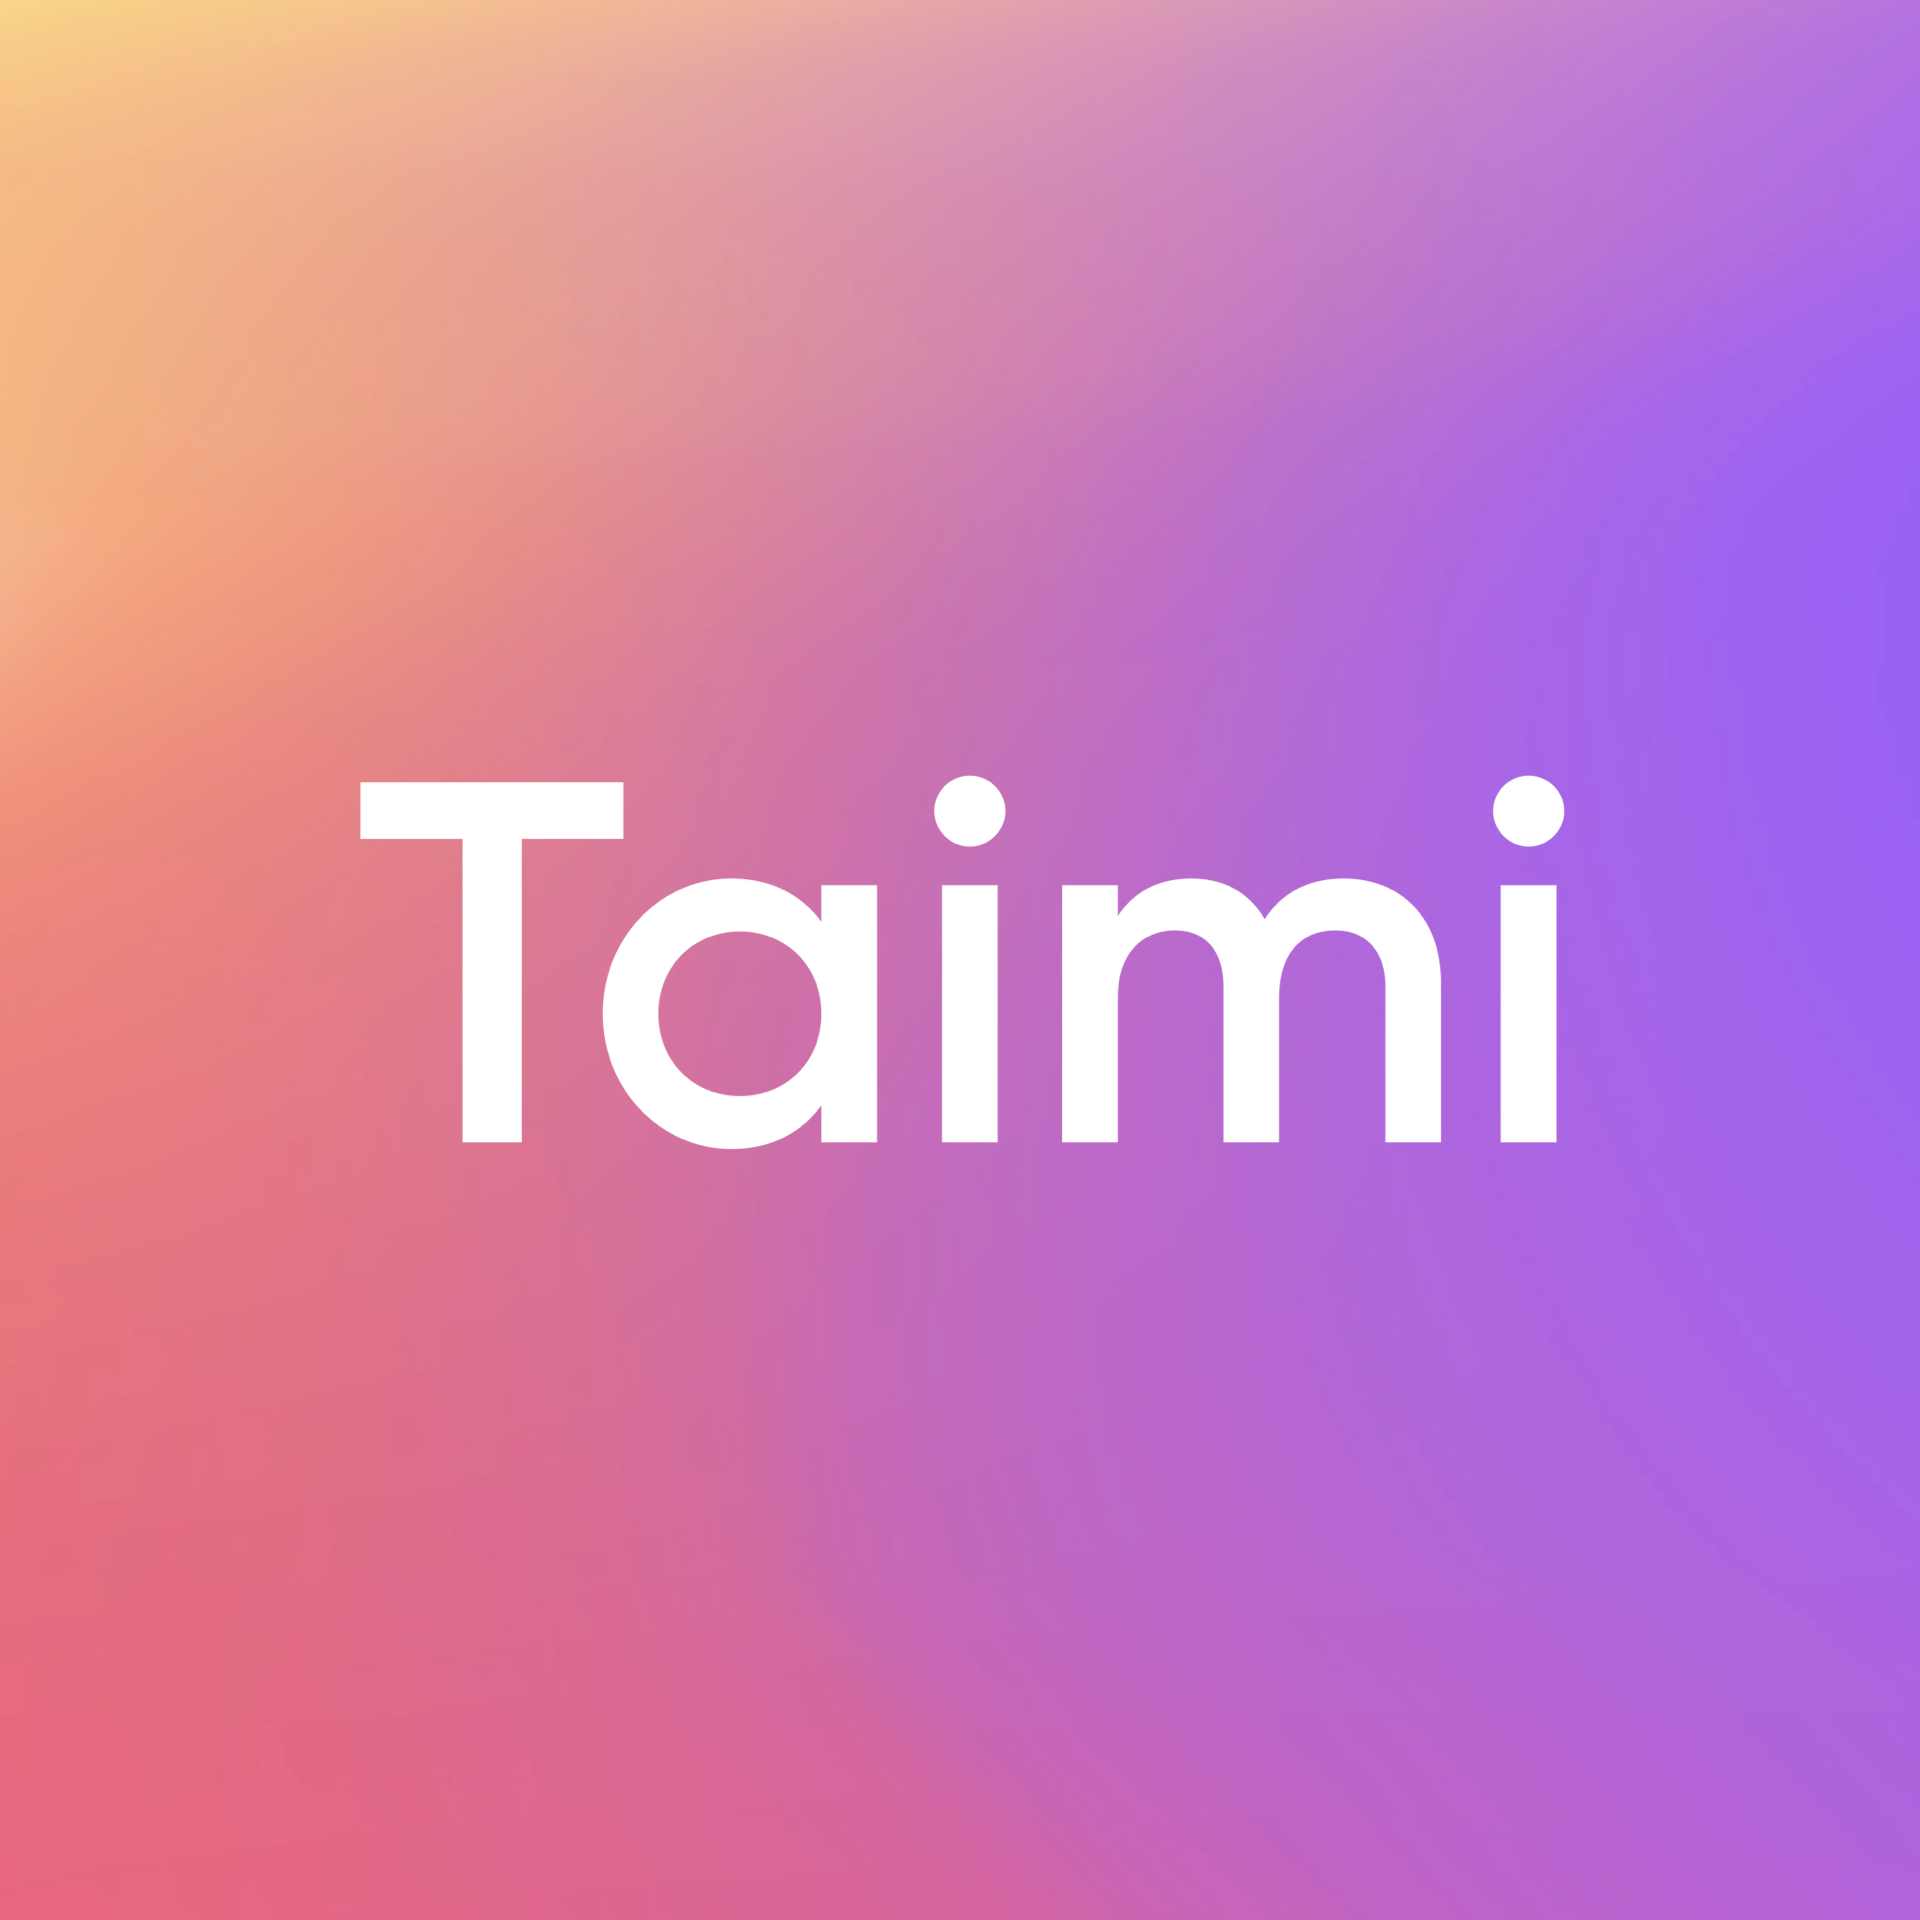 Taimi among Gay Times Honors 2020 recipients